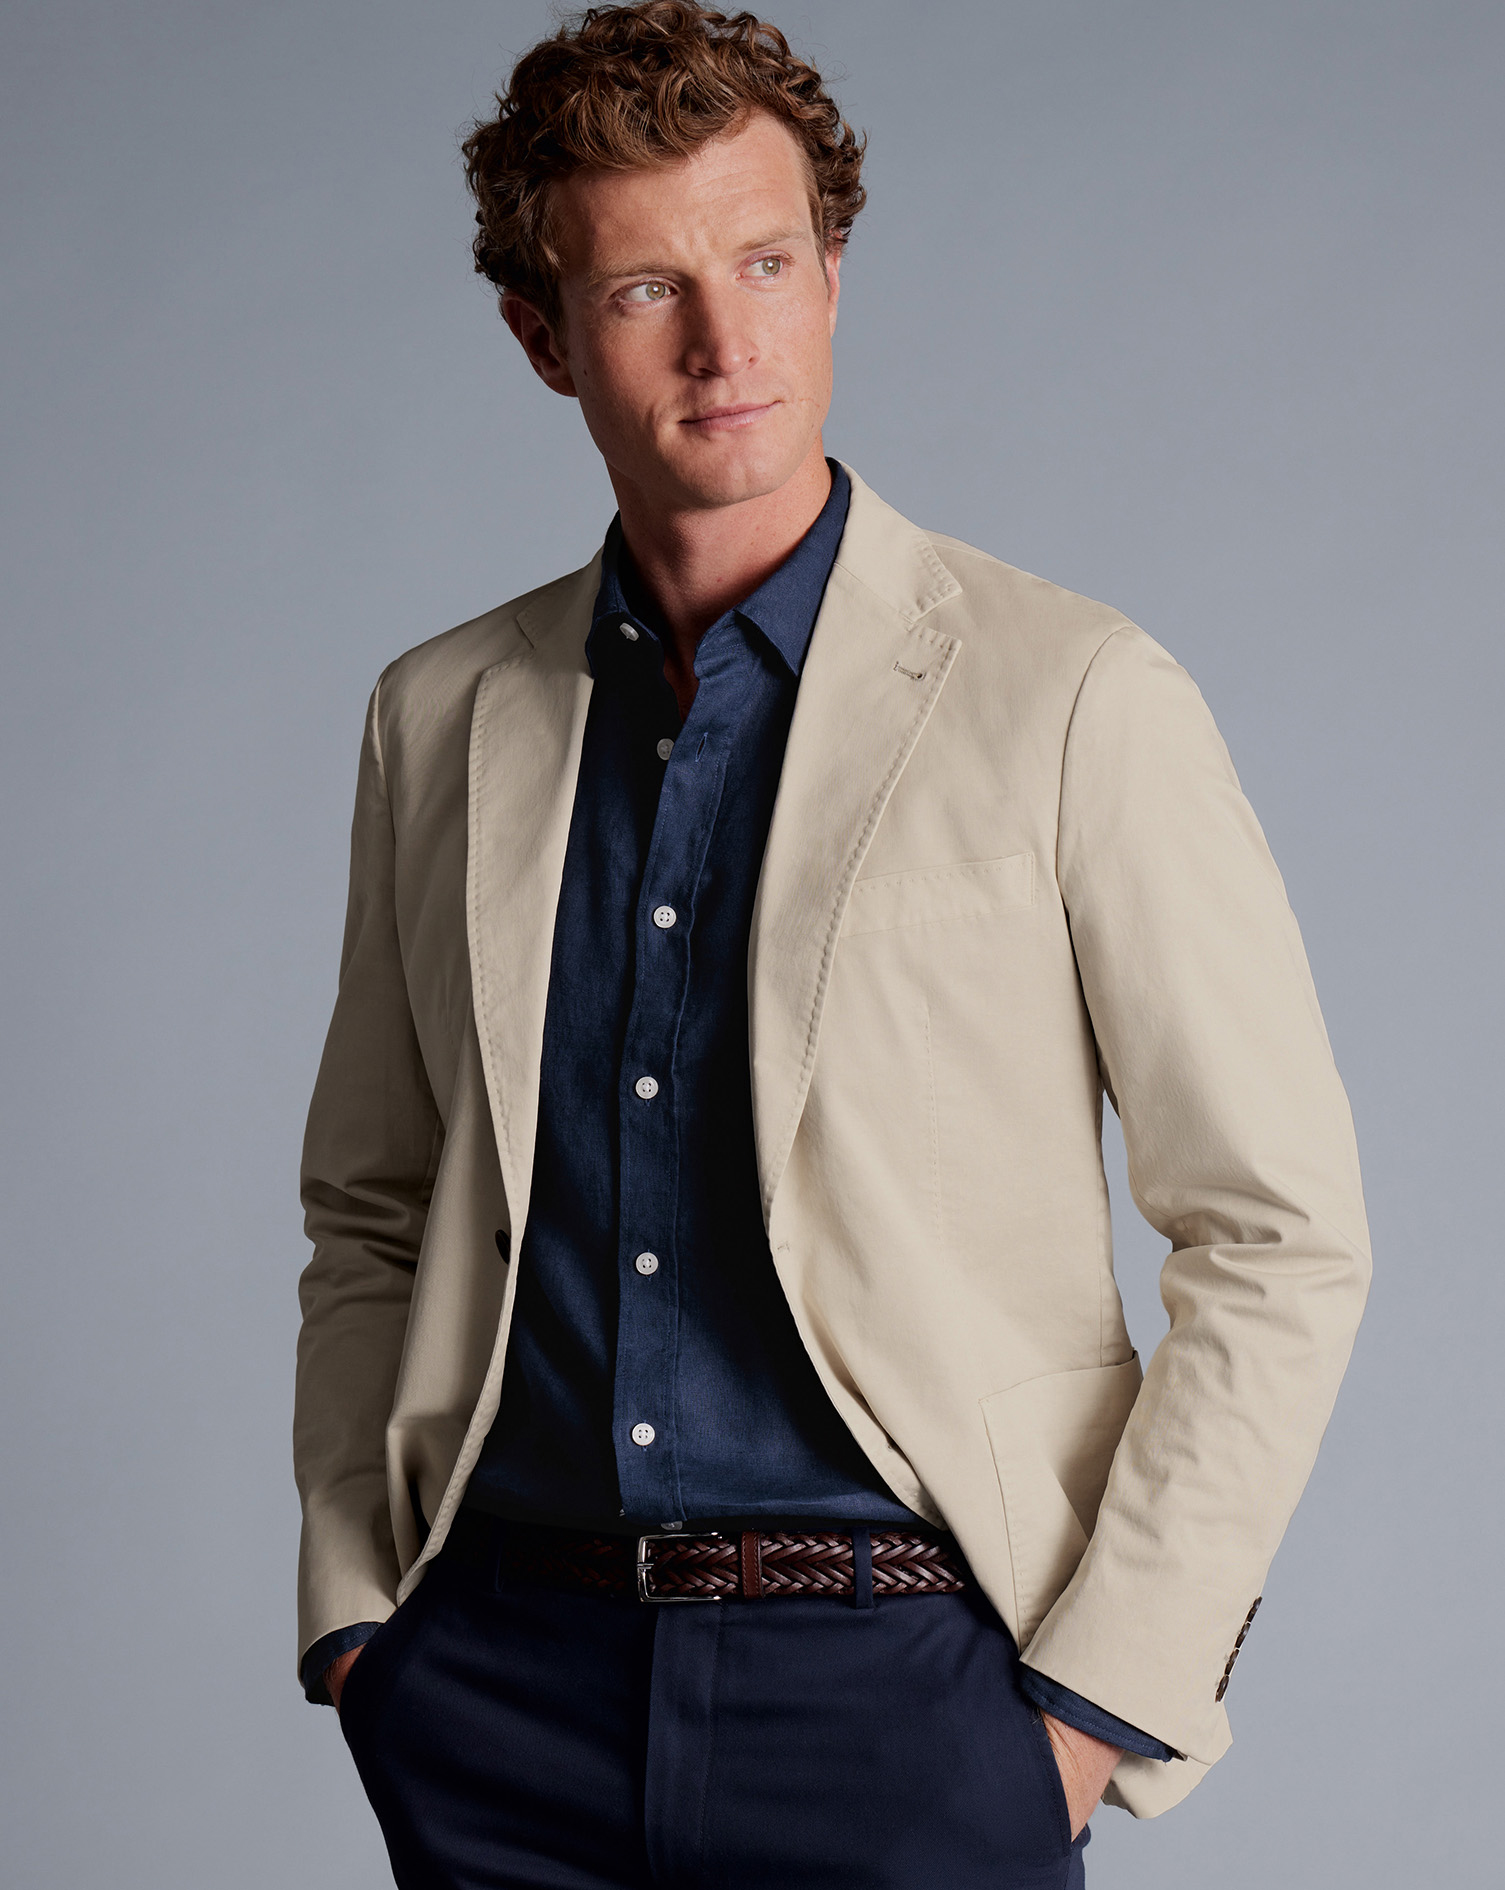 Charles Tyrwhitt Stretch Garment Dyed na Jacket - Limestone Neutral Size 36R Cotton
